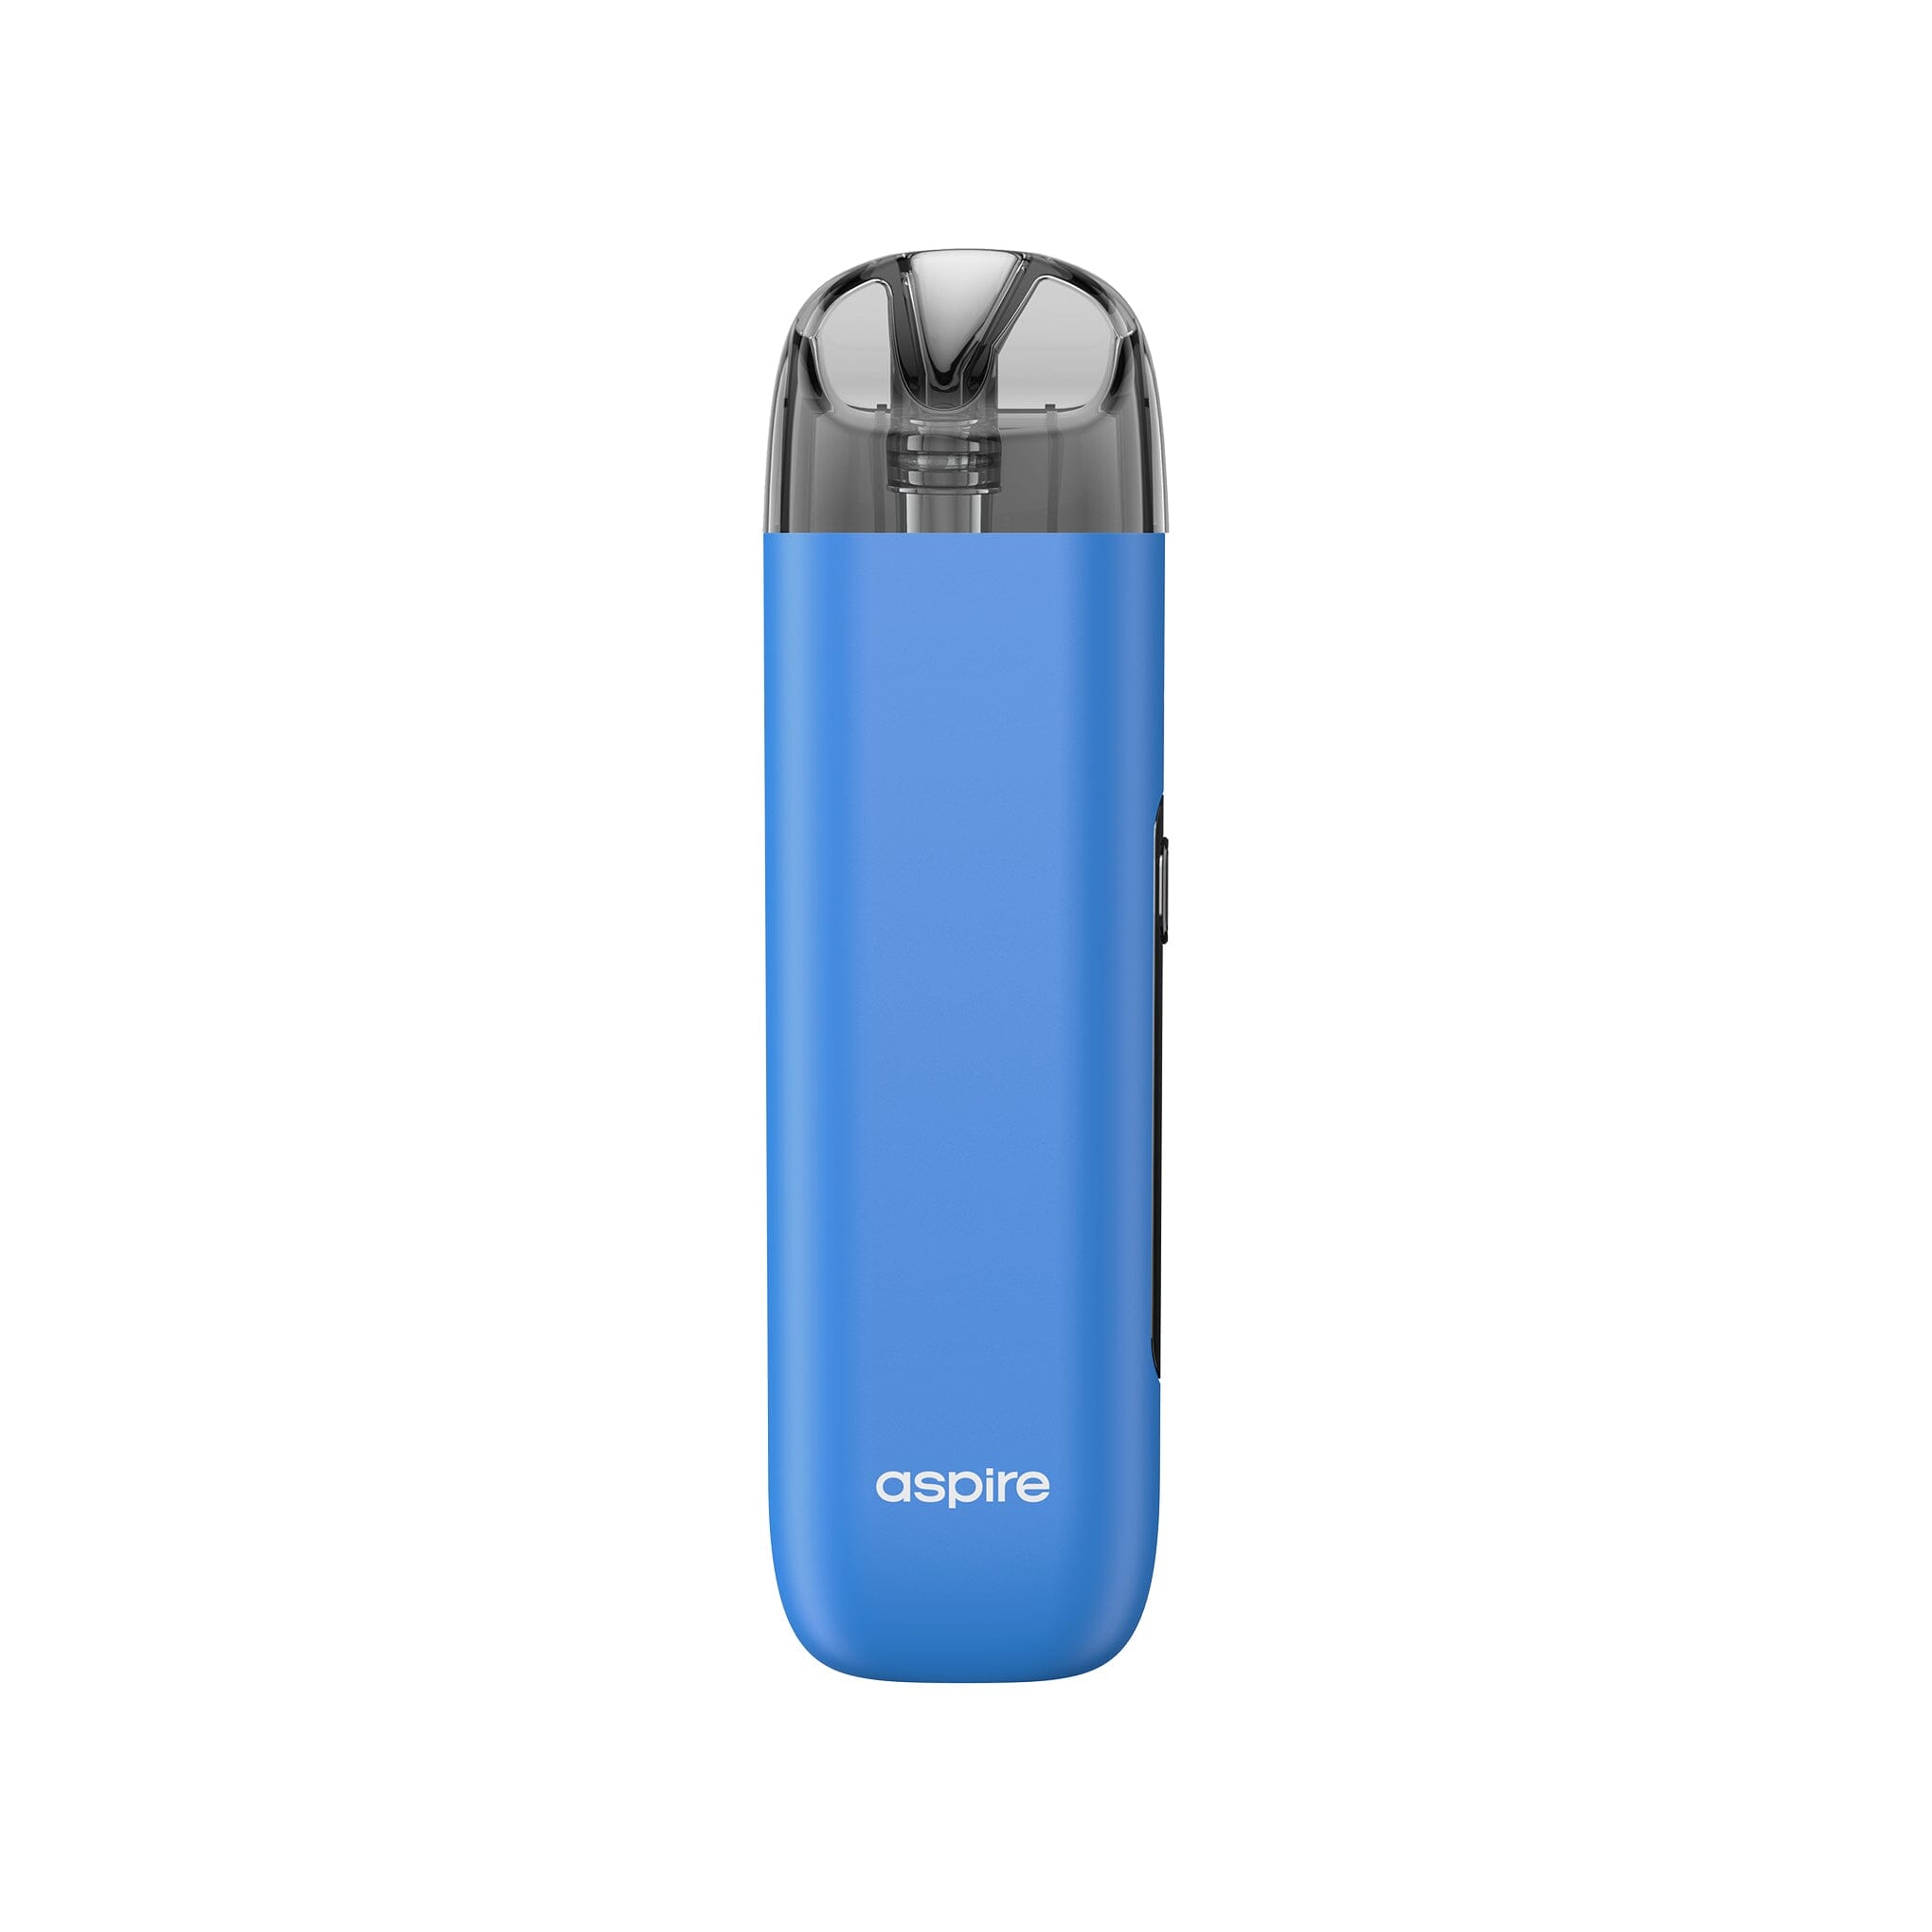 Aspire Minican 3 Pro Kit Azure Blue 